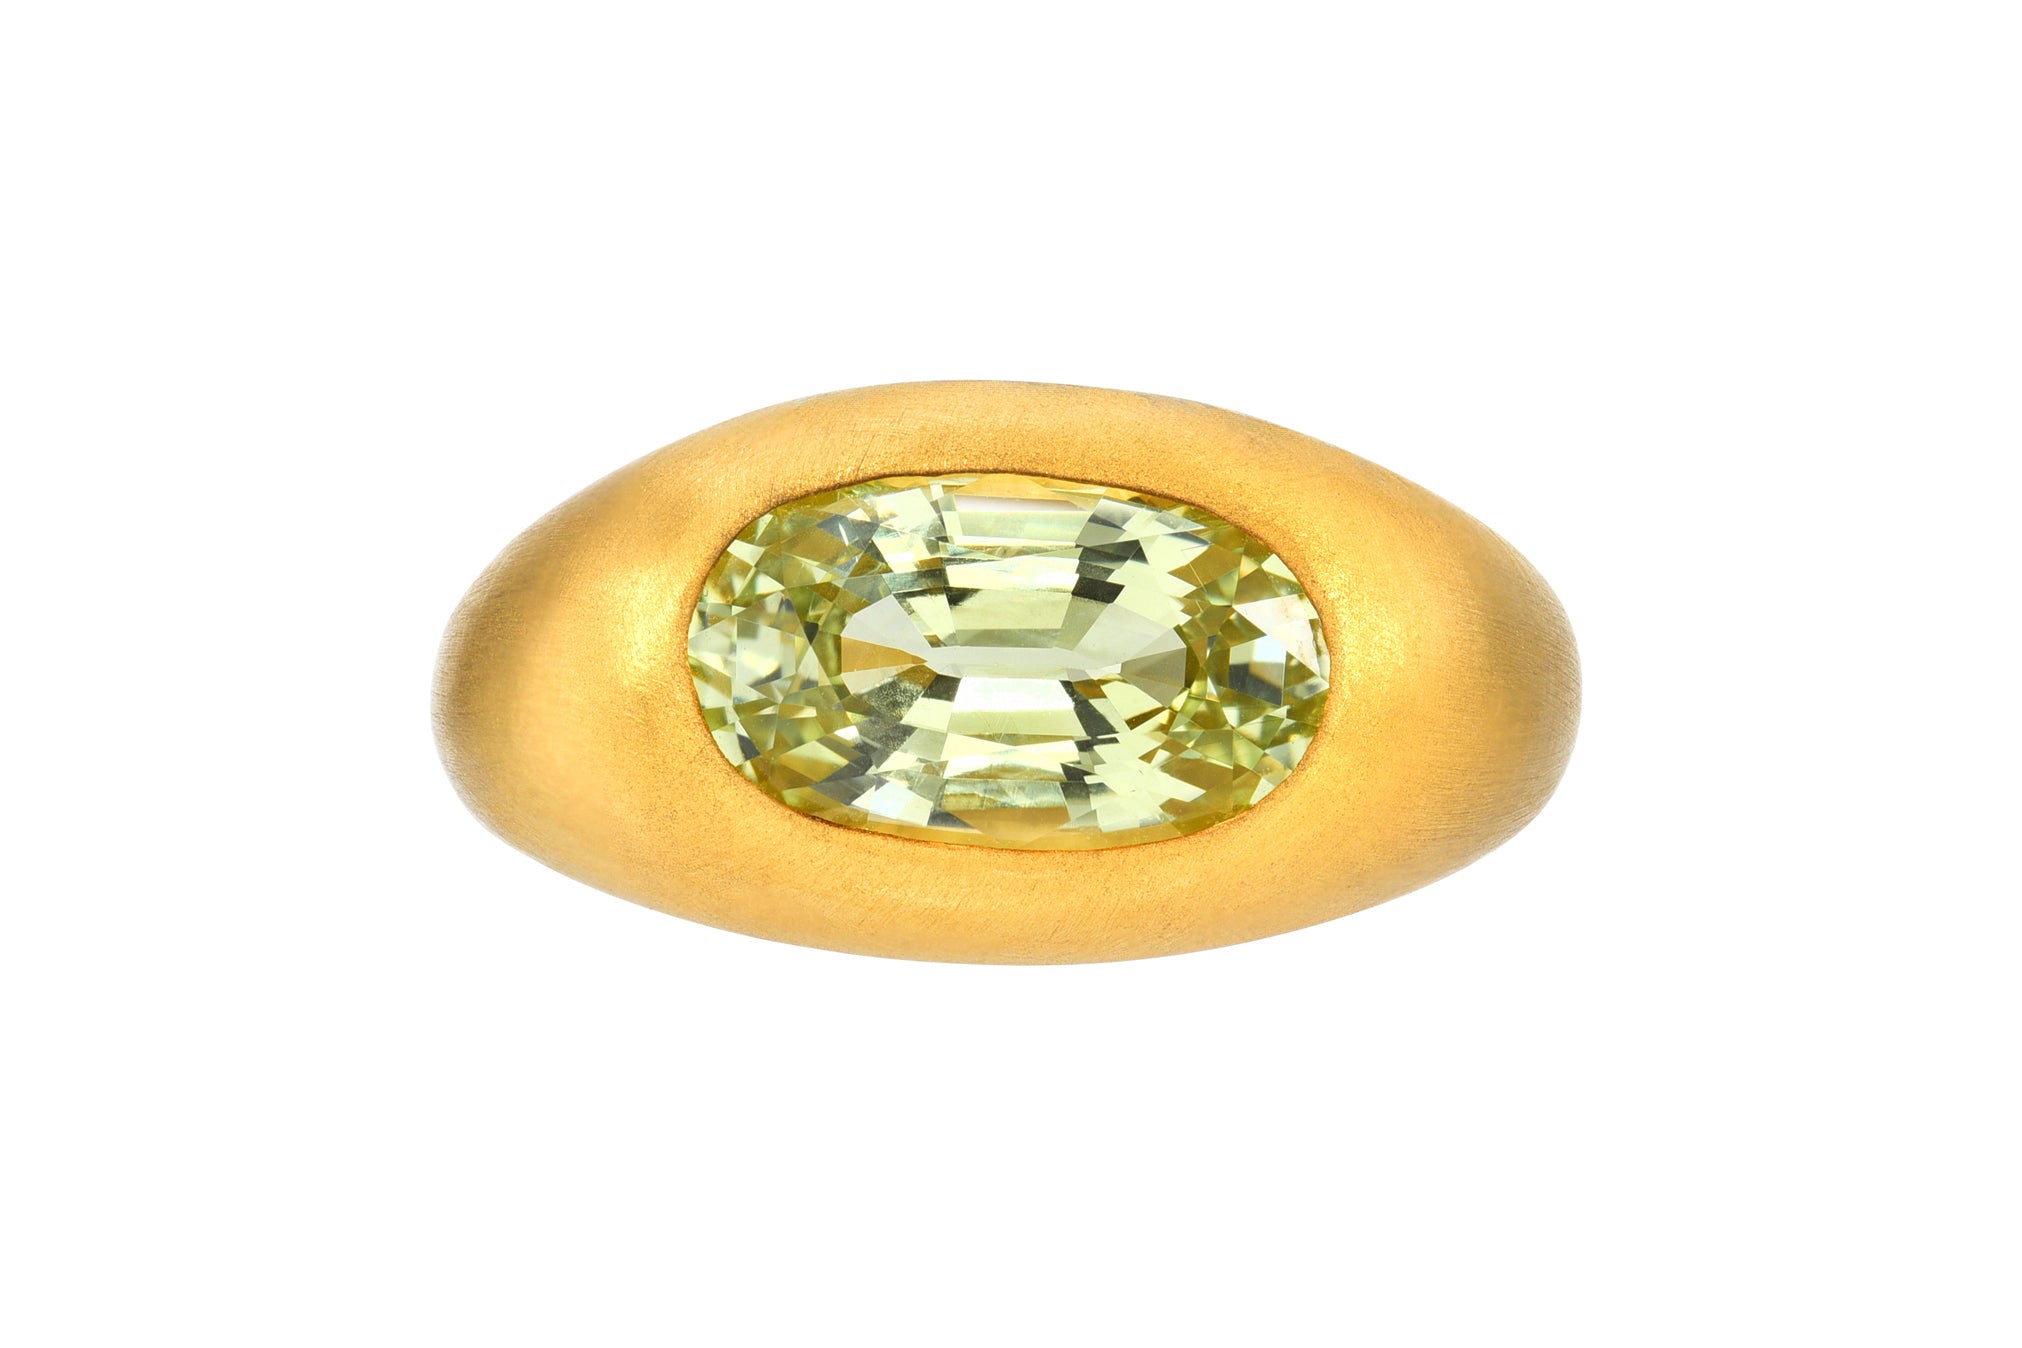 darius jewels one of a kind chrysoberyl gem signet ring darya khonsary twist arielle chiara